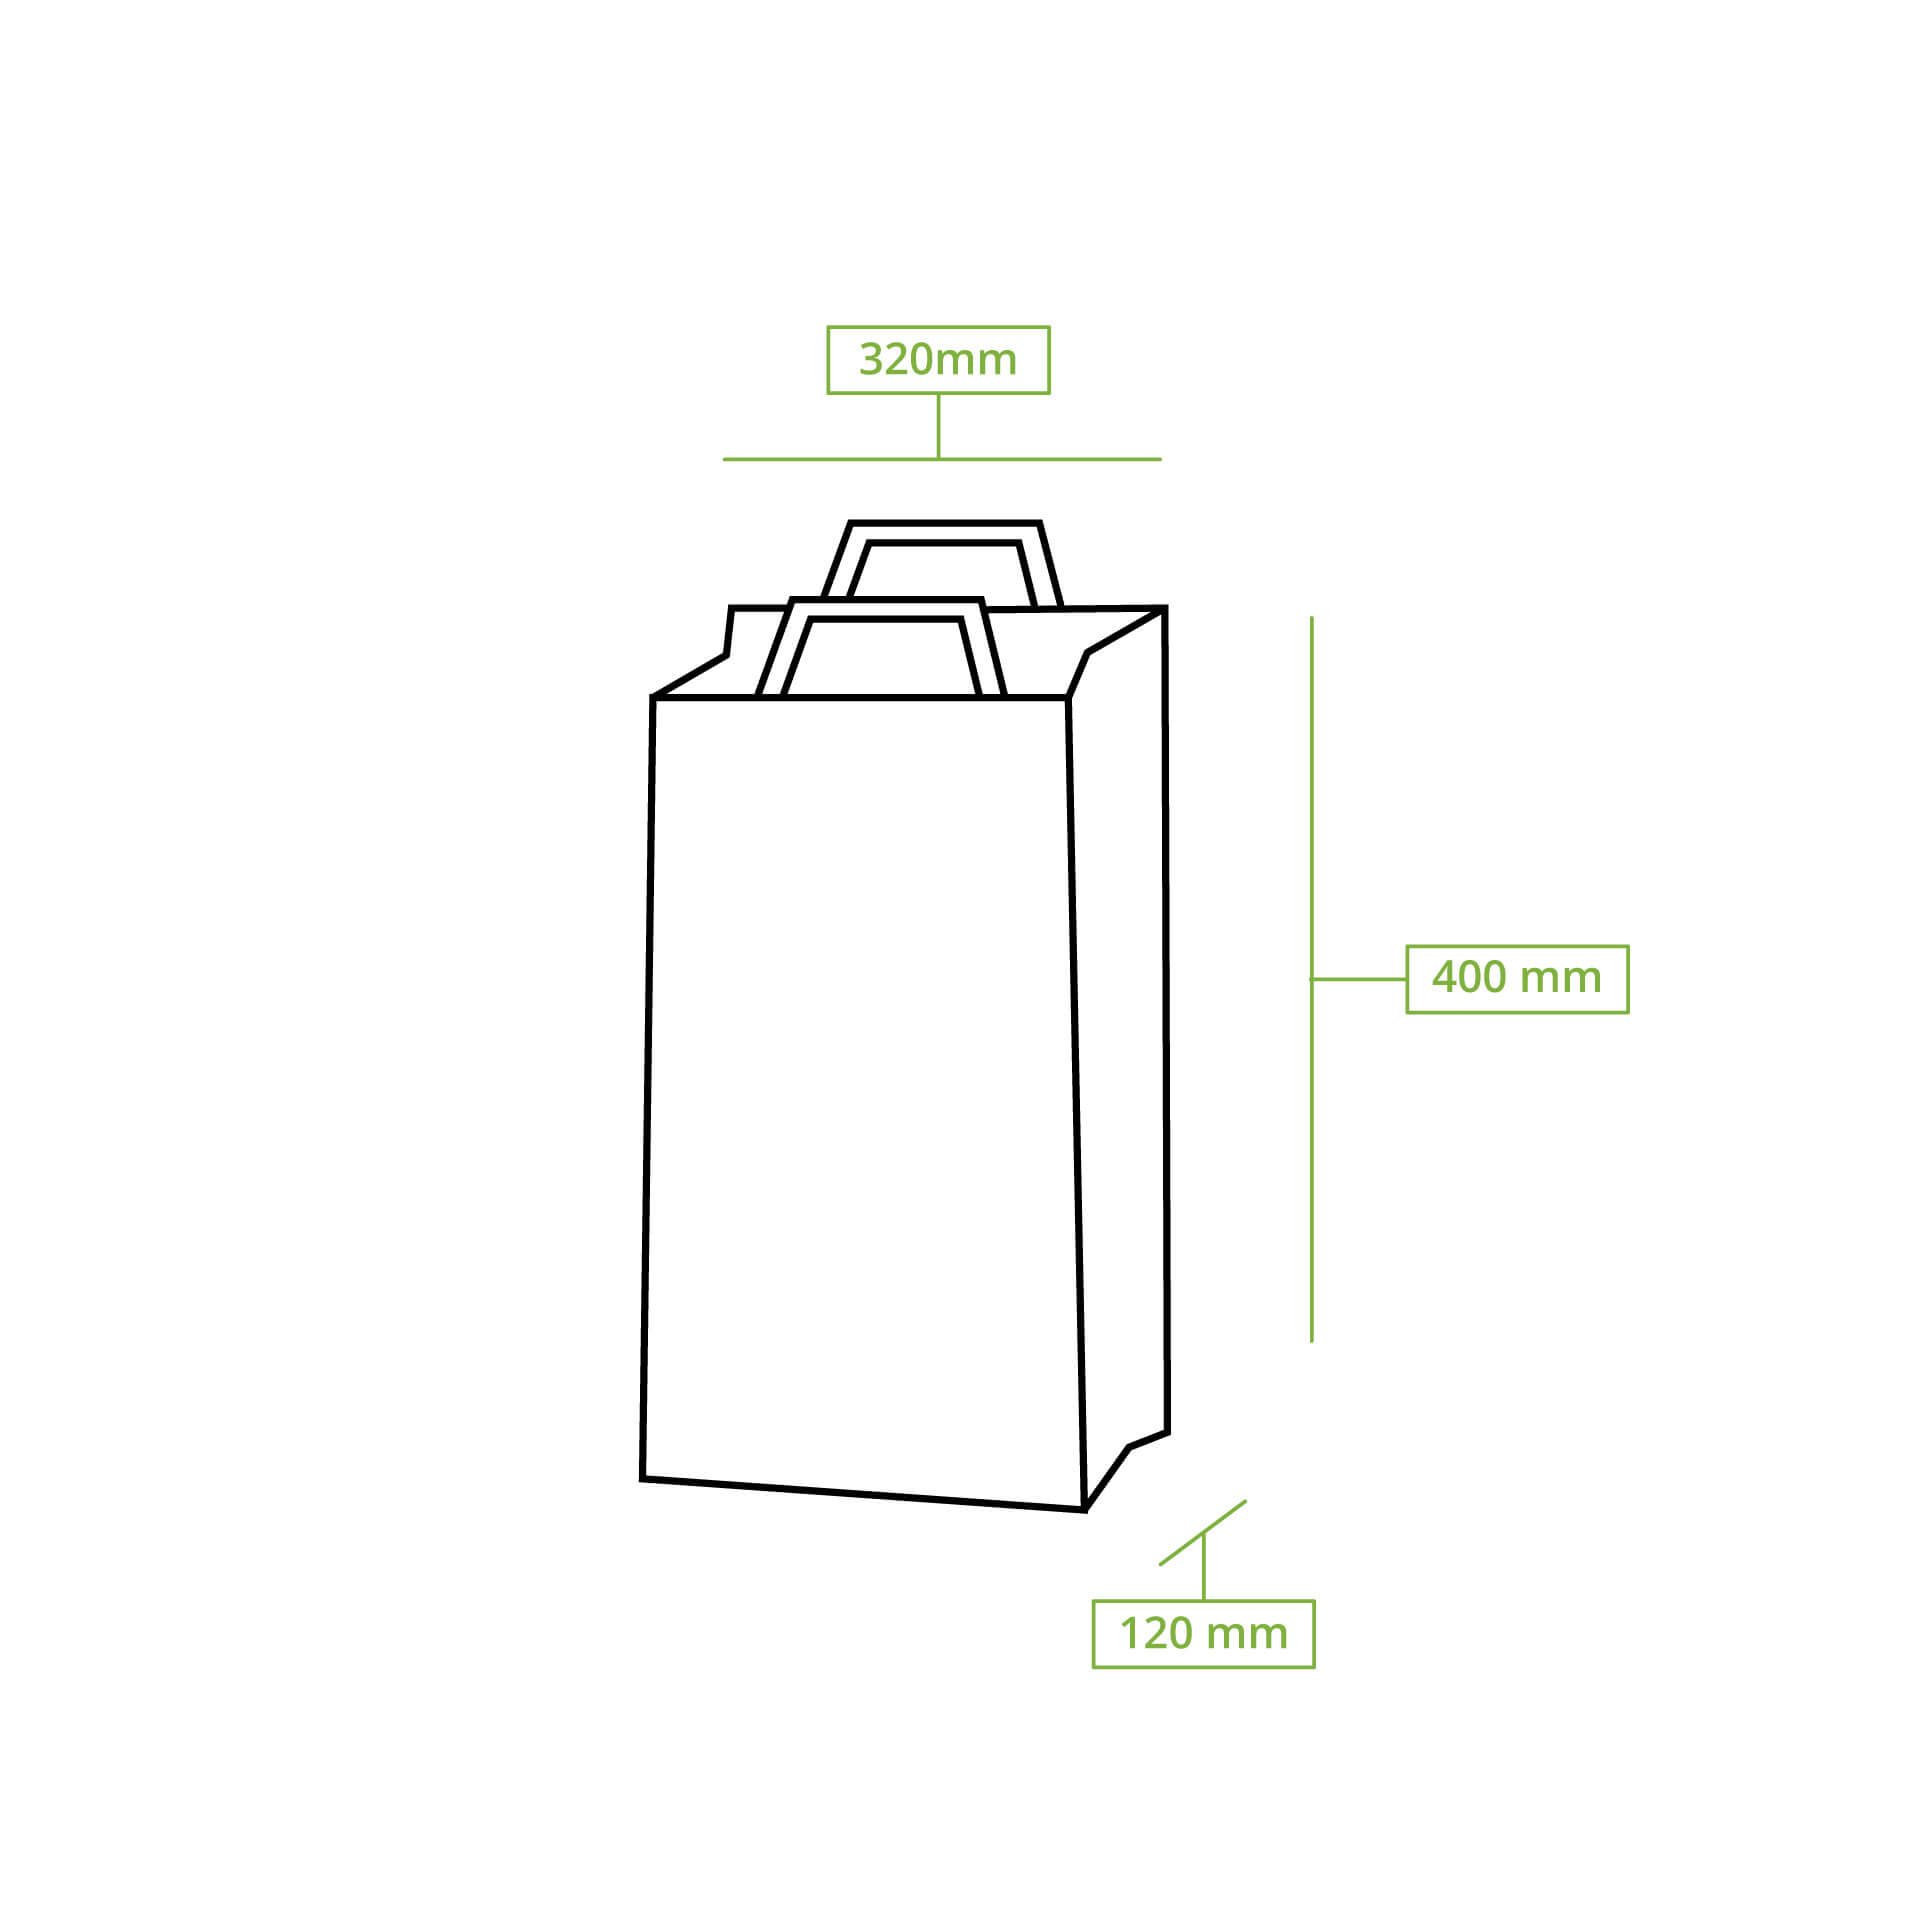 Recycling paper-carrier bags XL, 32 x 12 x 40 cm, kraft